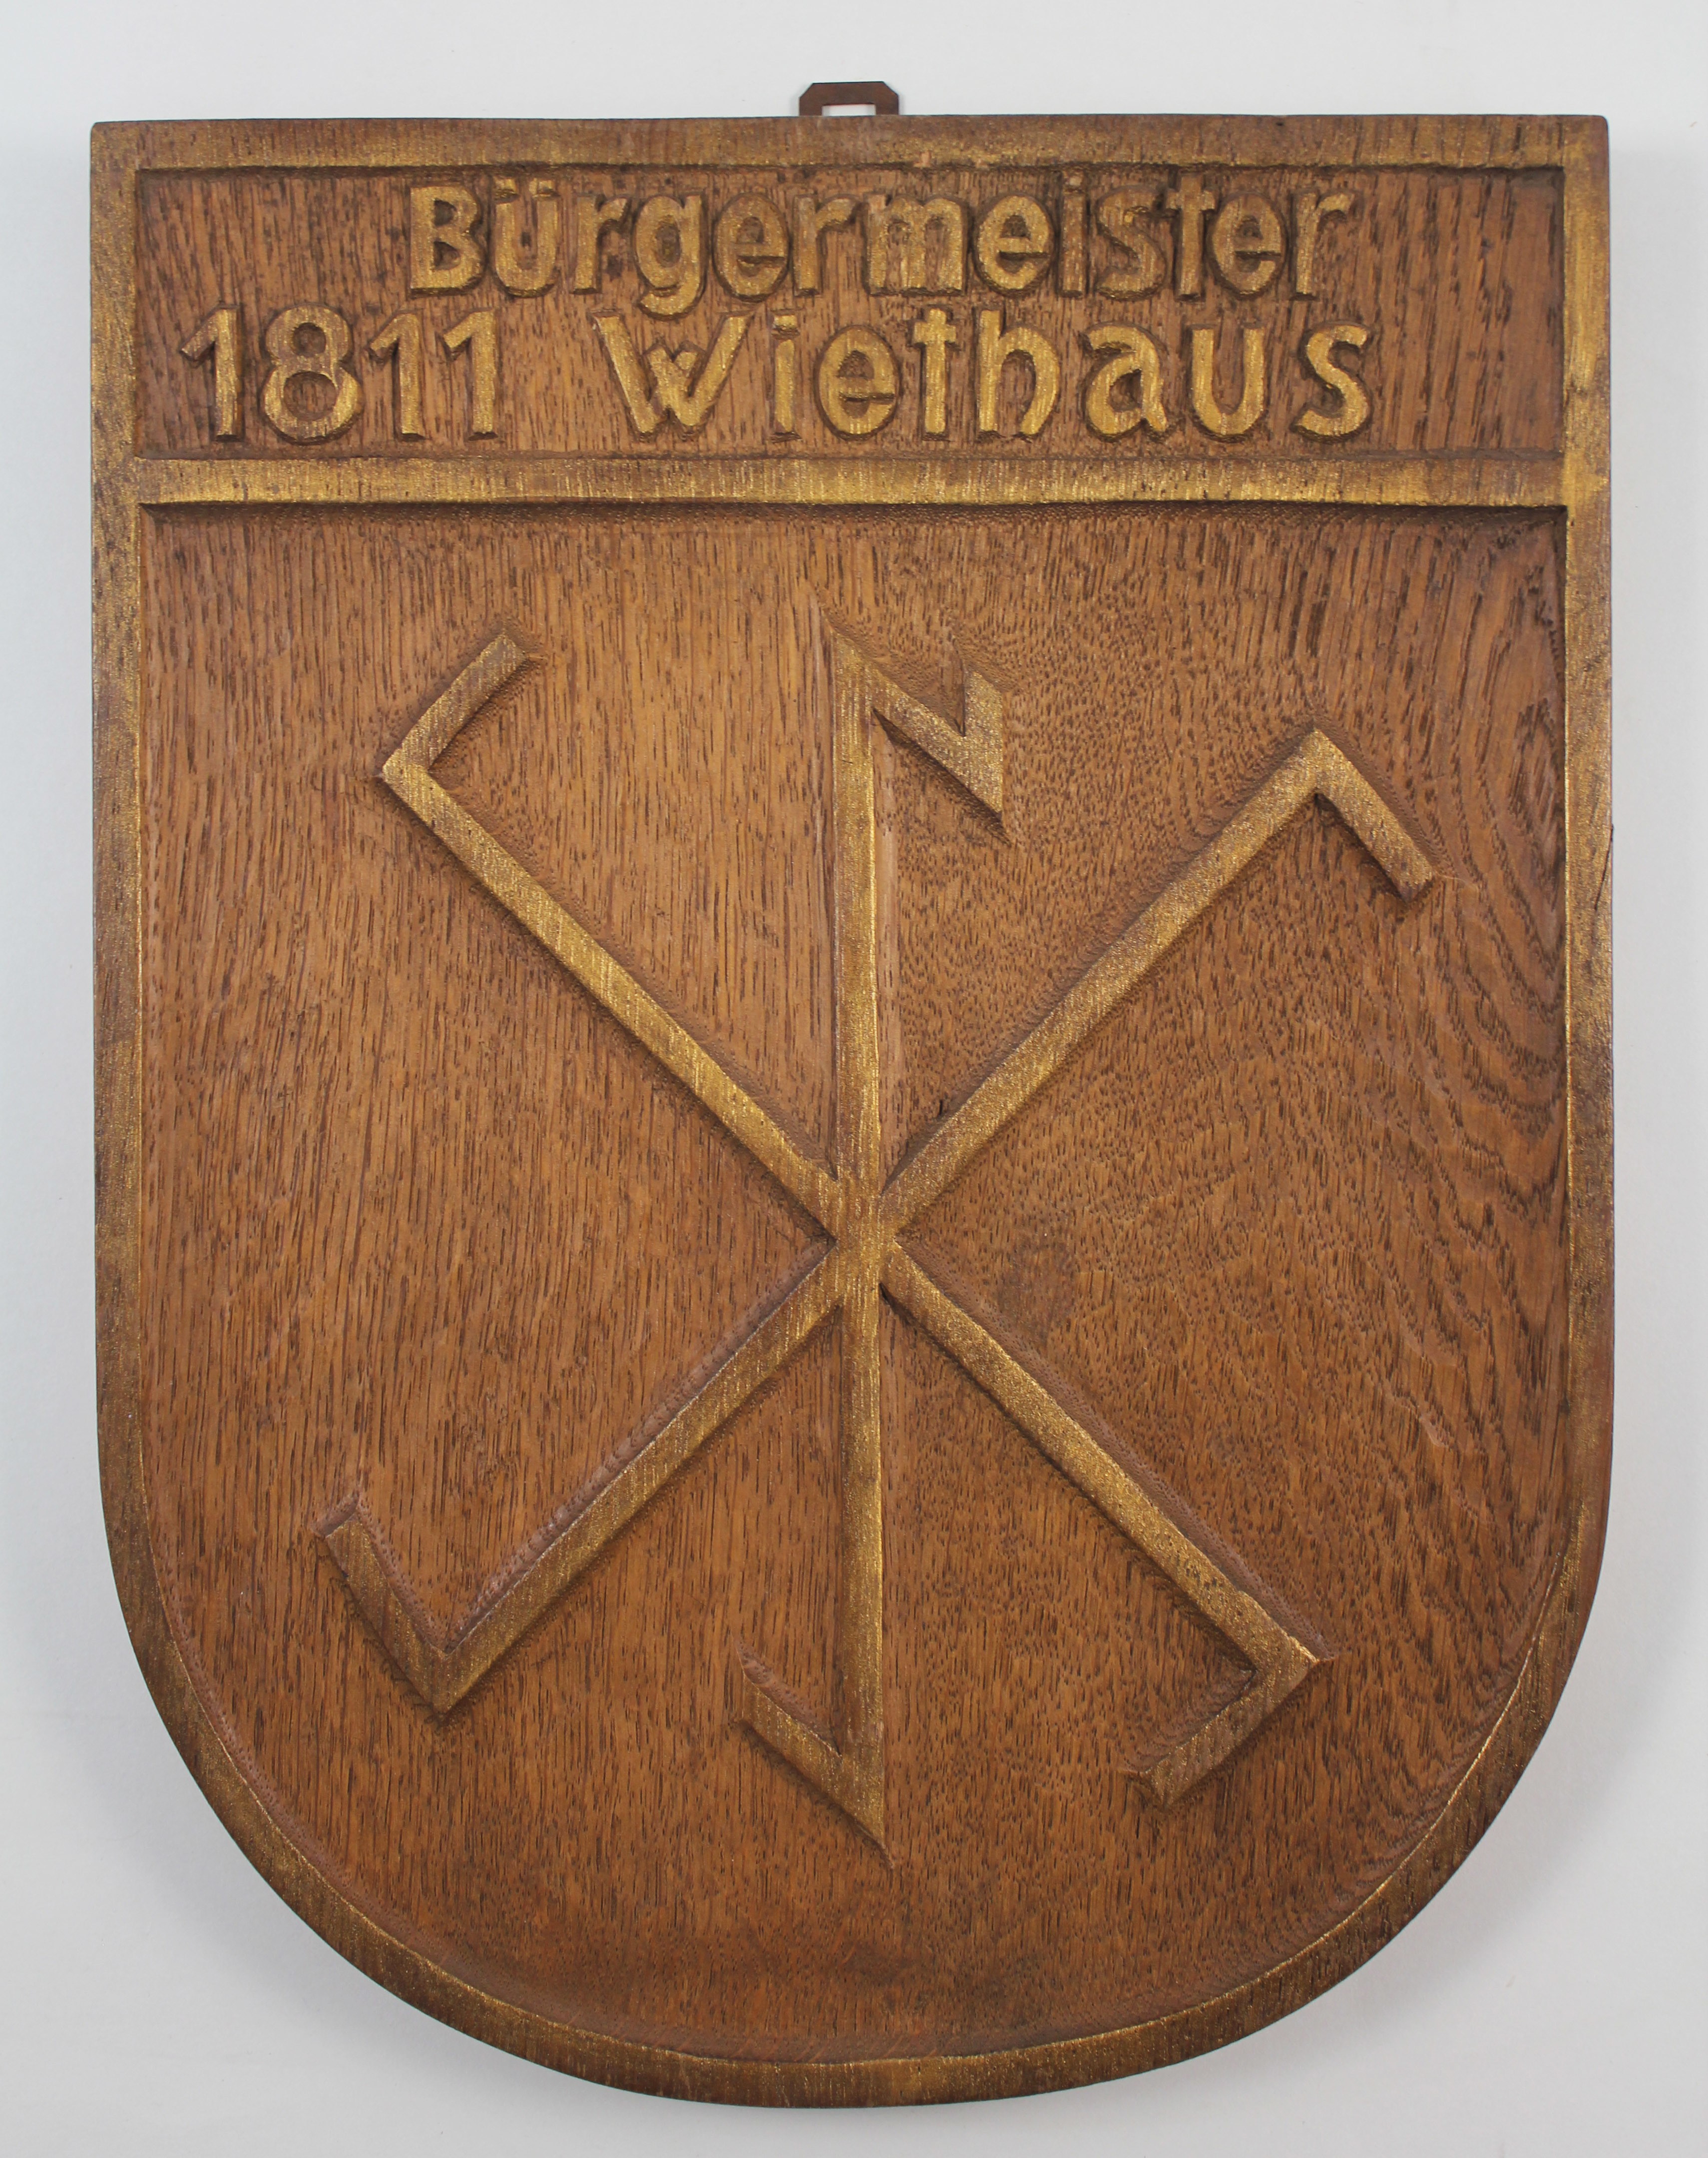 Wappenschild & Hölzernes Wappen mit Hausmarke, Bürgermeister Wiethaus 1811 (Hellweg-Museum Unna CC BY-NC-SA)